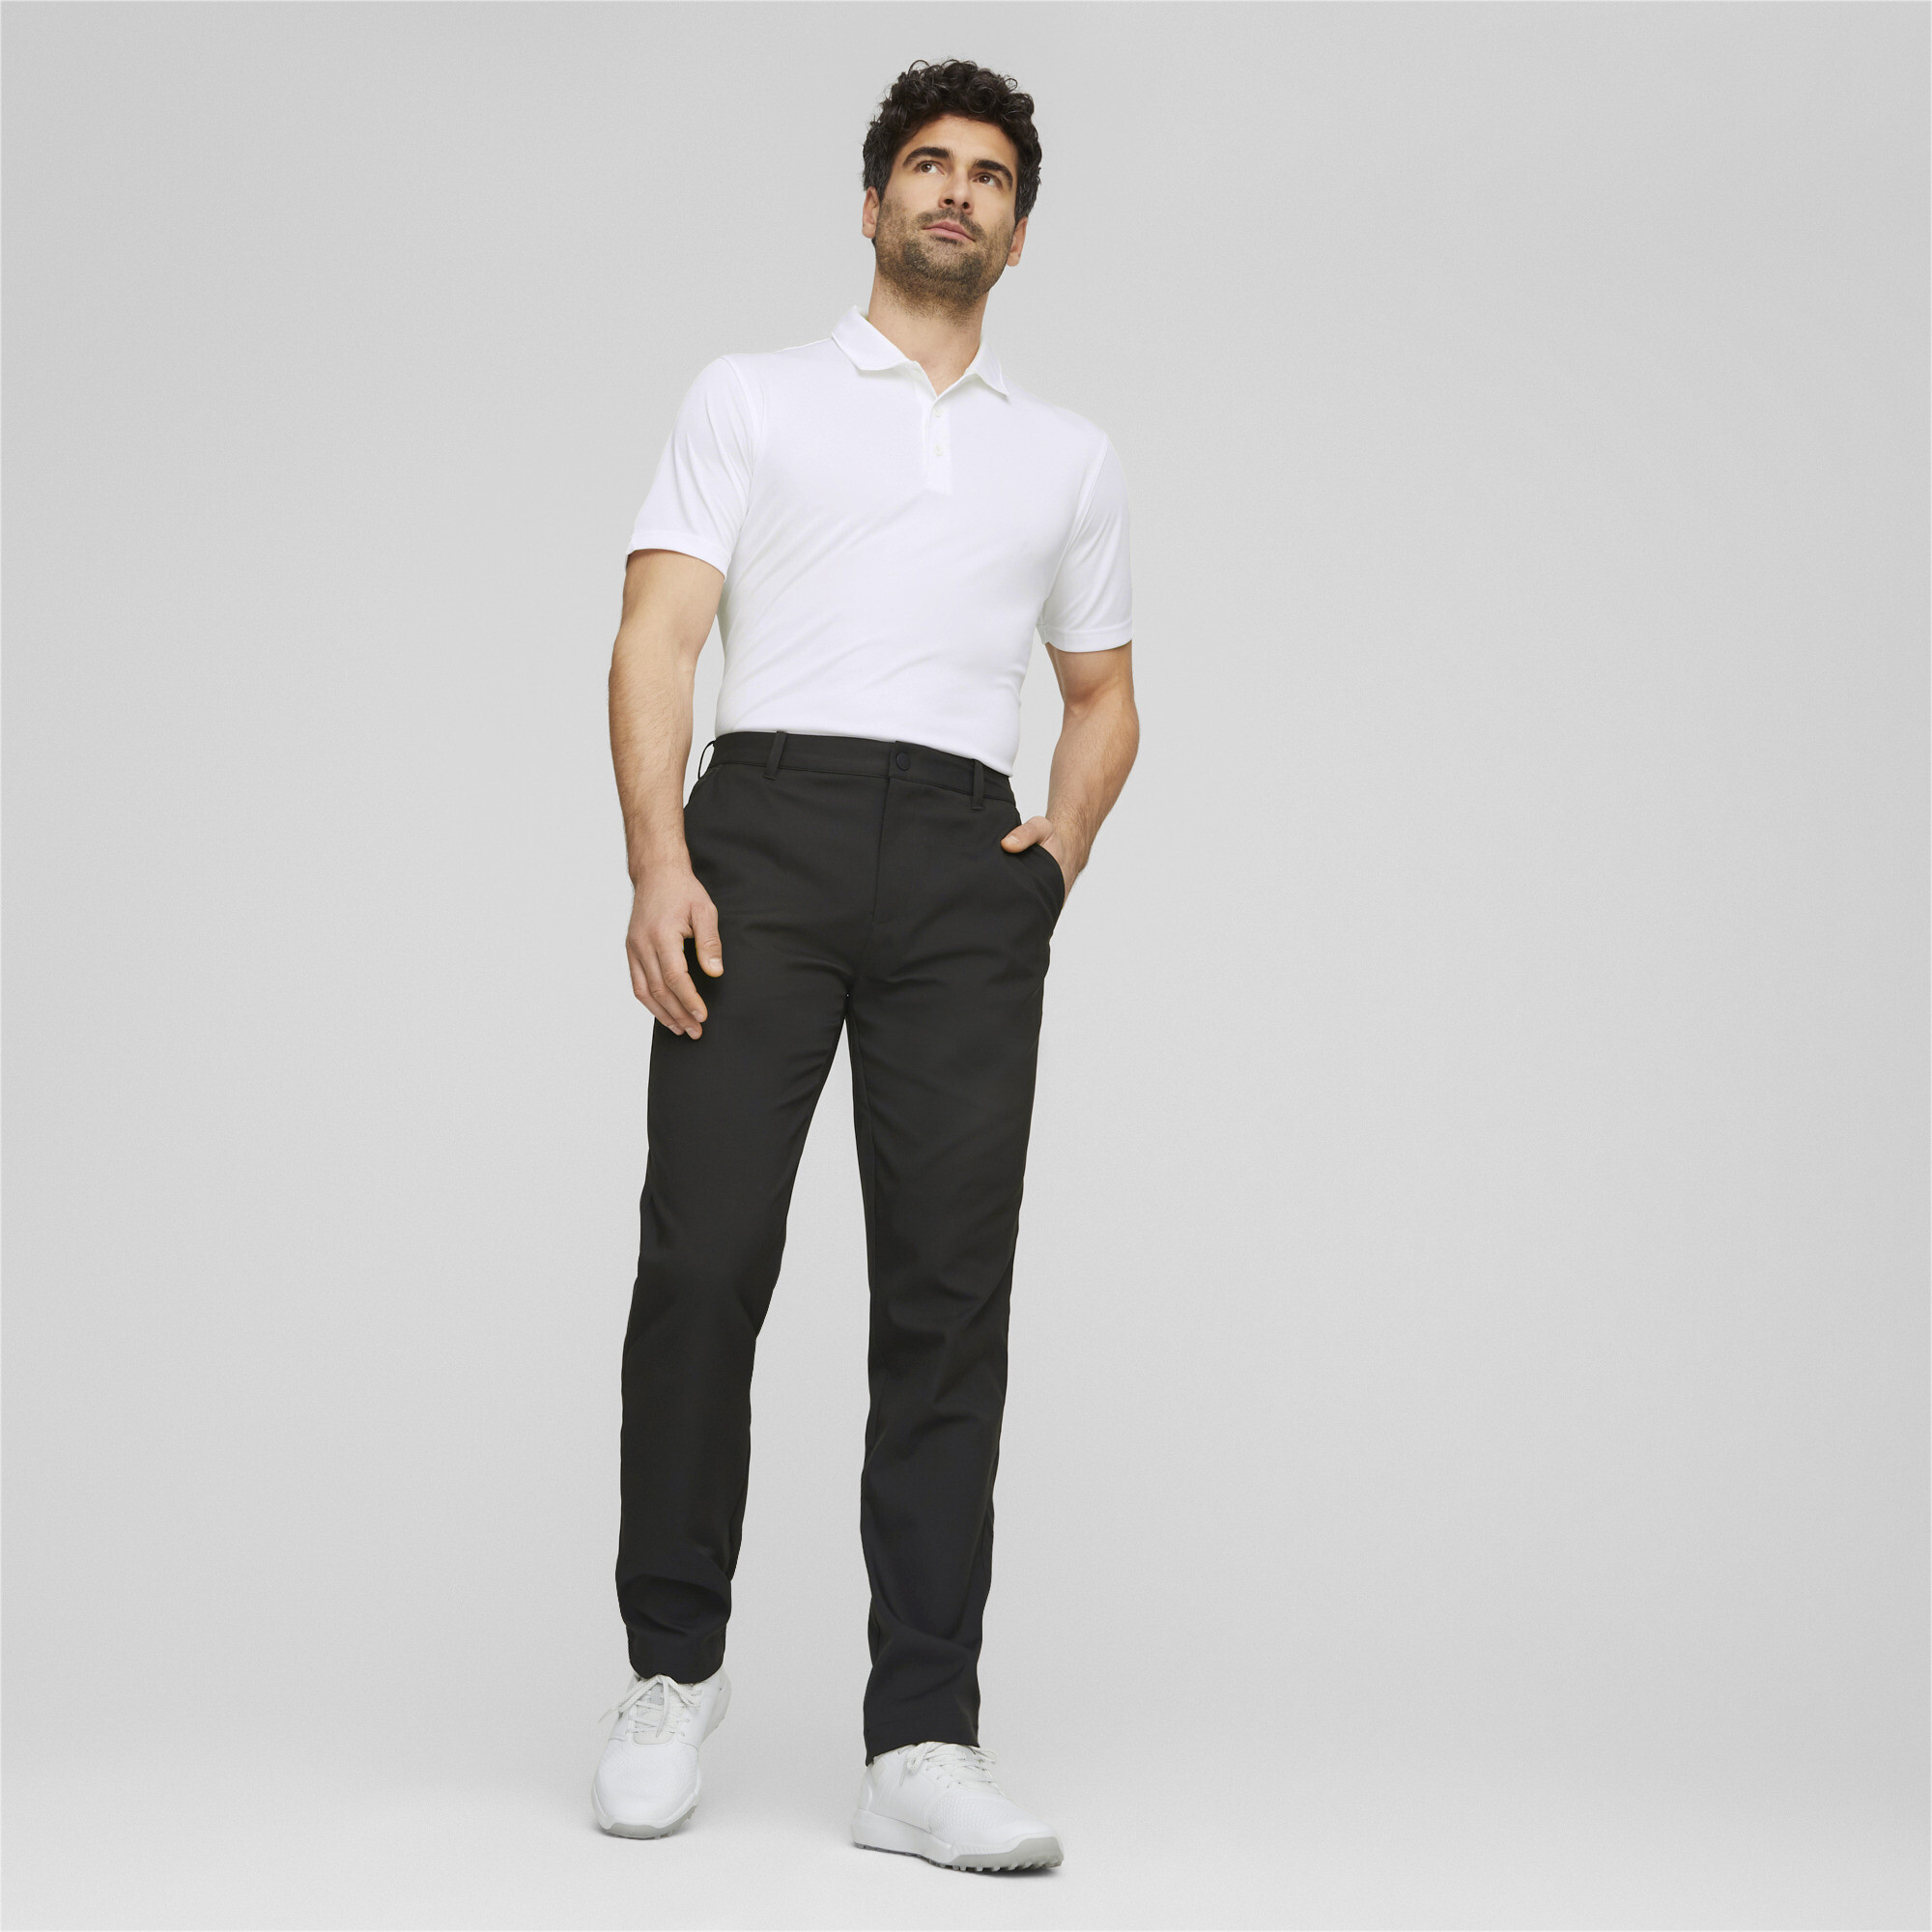 Men's Puma Dealer Golf Pants, Black, Size 34/36, Clothing